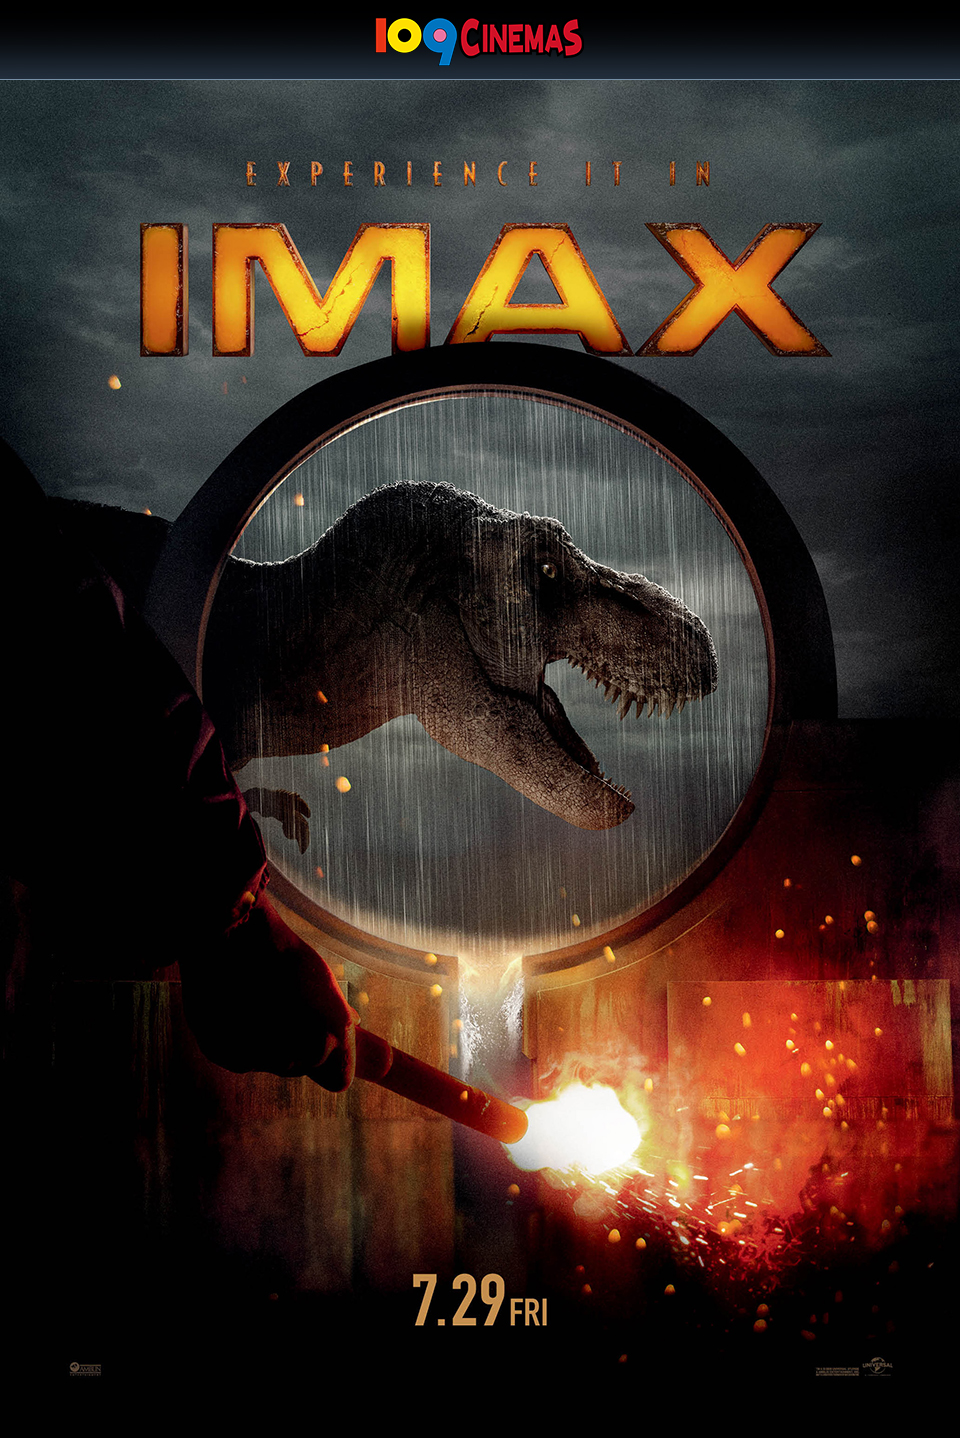 109CINEMAS　EXPERIENCE IT IN IMAX 7.29 FRI